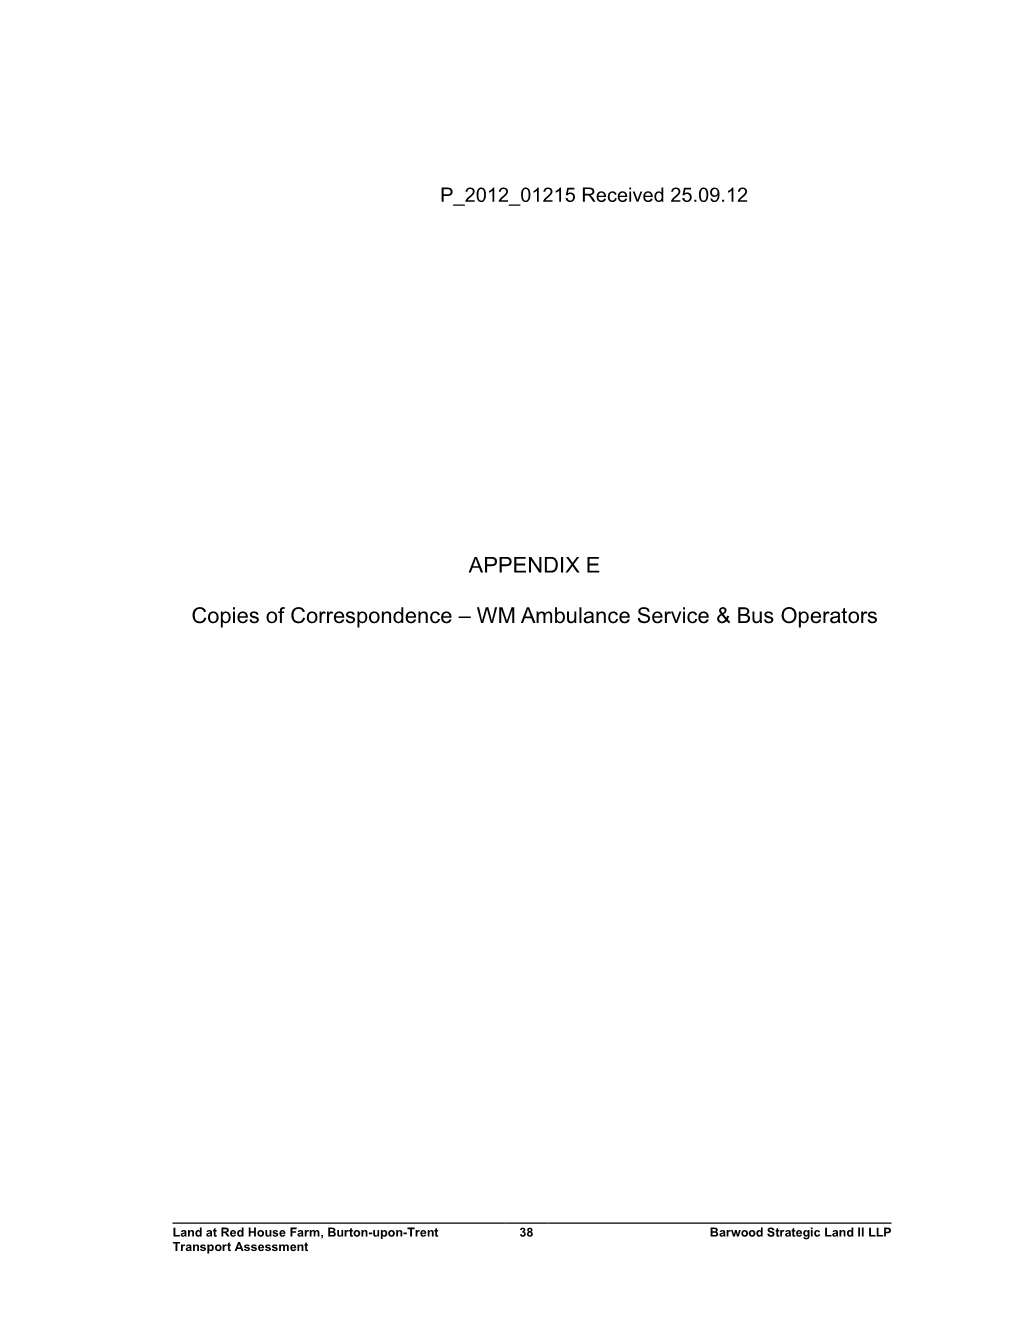 APPENDIX E Copies of Correspondence – WM Ambulance Service & Bus Operators